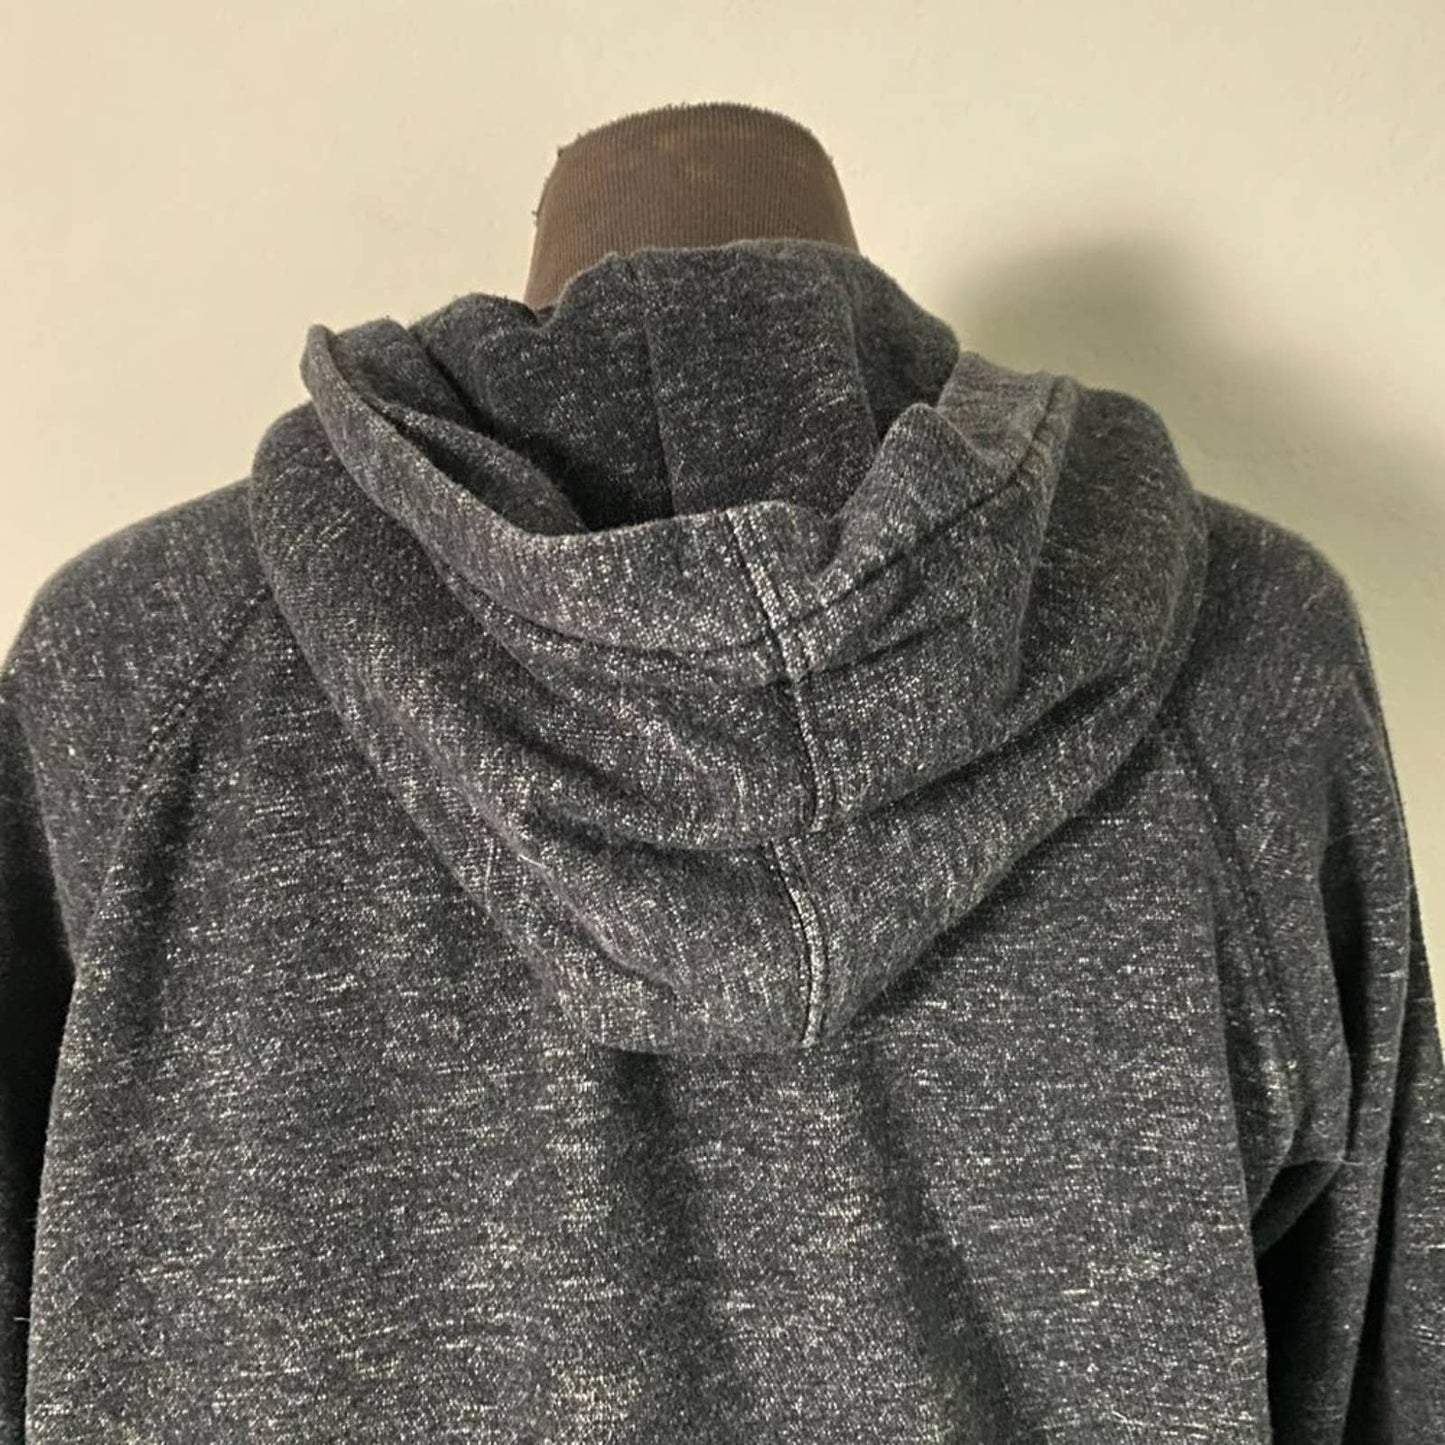 Billabong sz S 100% Cotton long sleeve zip hoodie